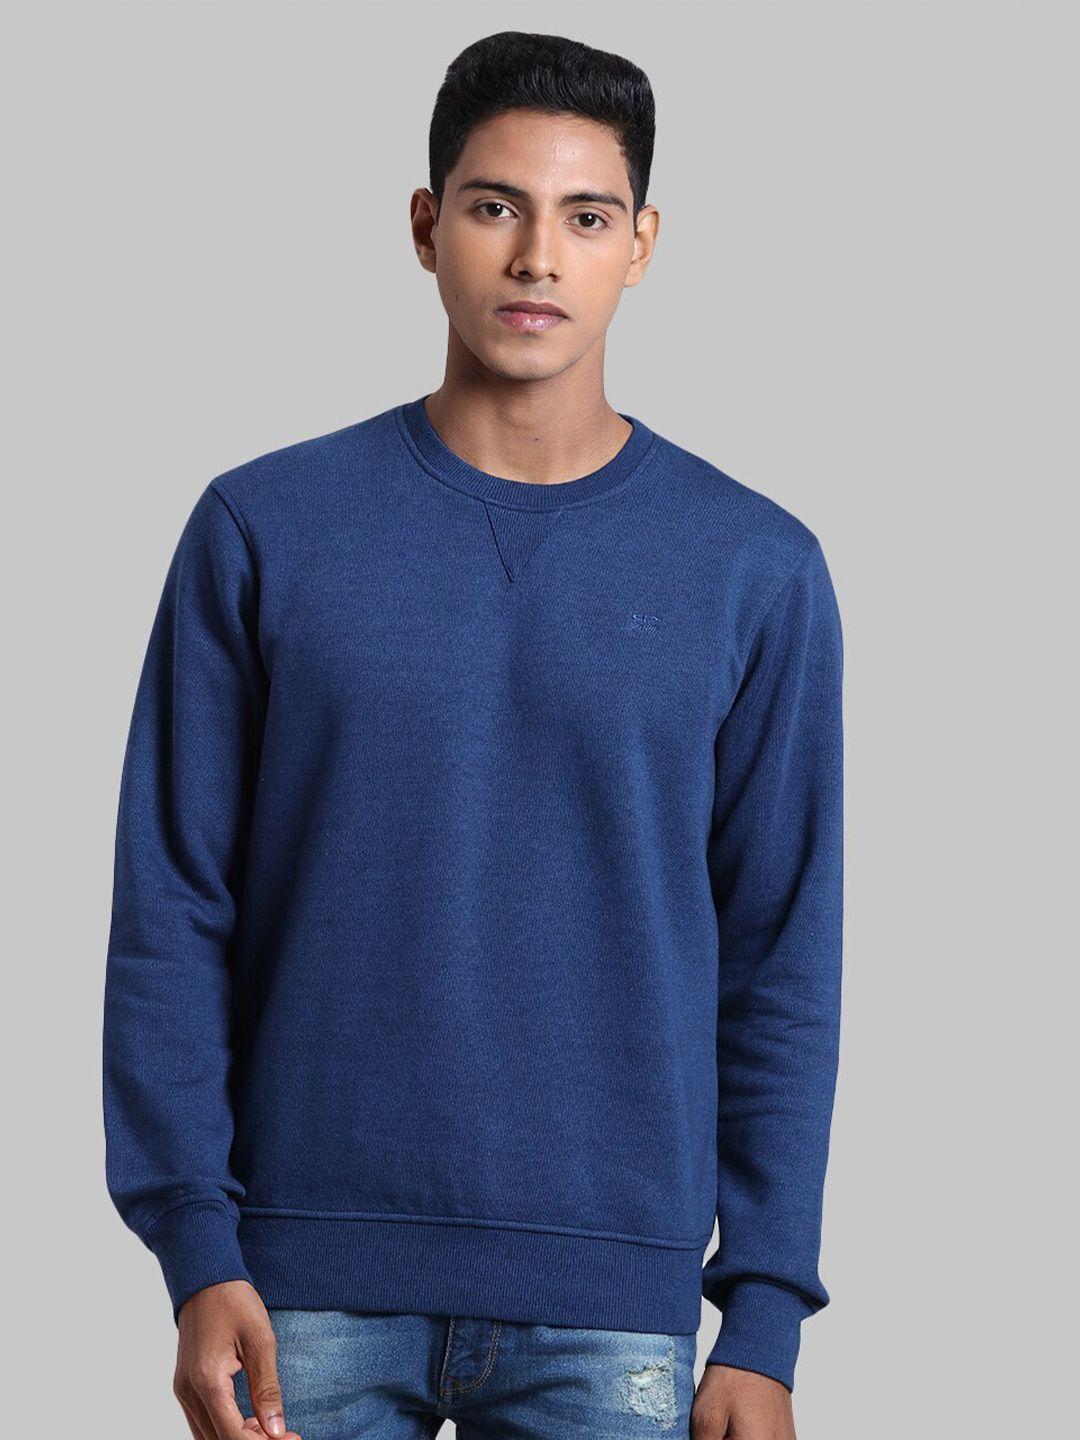 colorplus-men-blue-pullover-sweatshirt